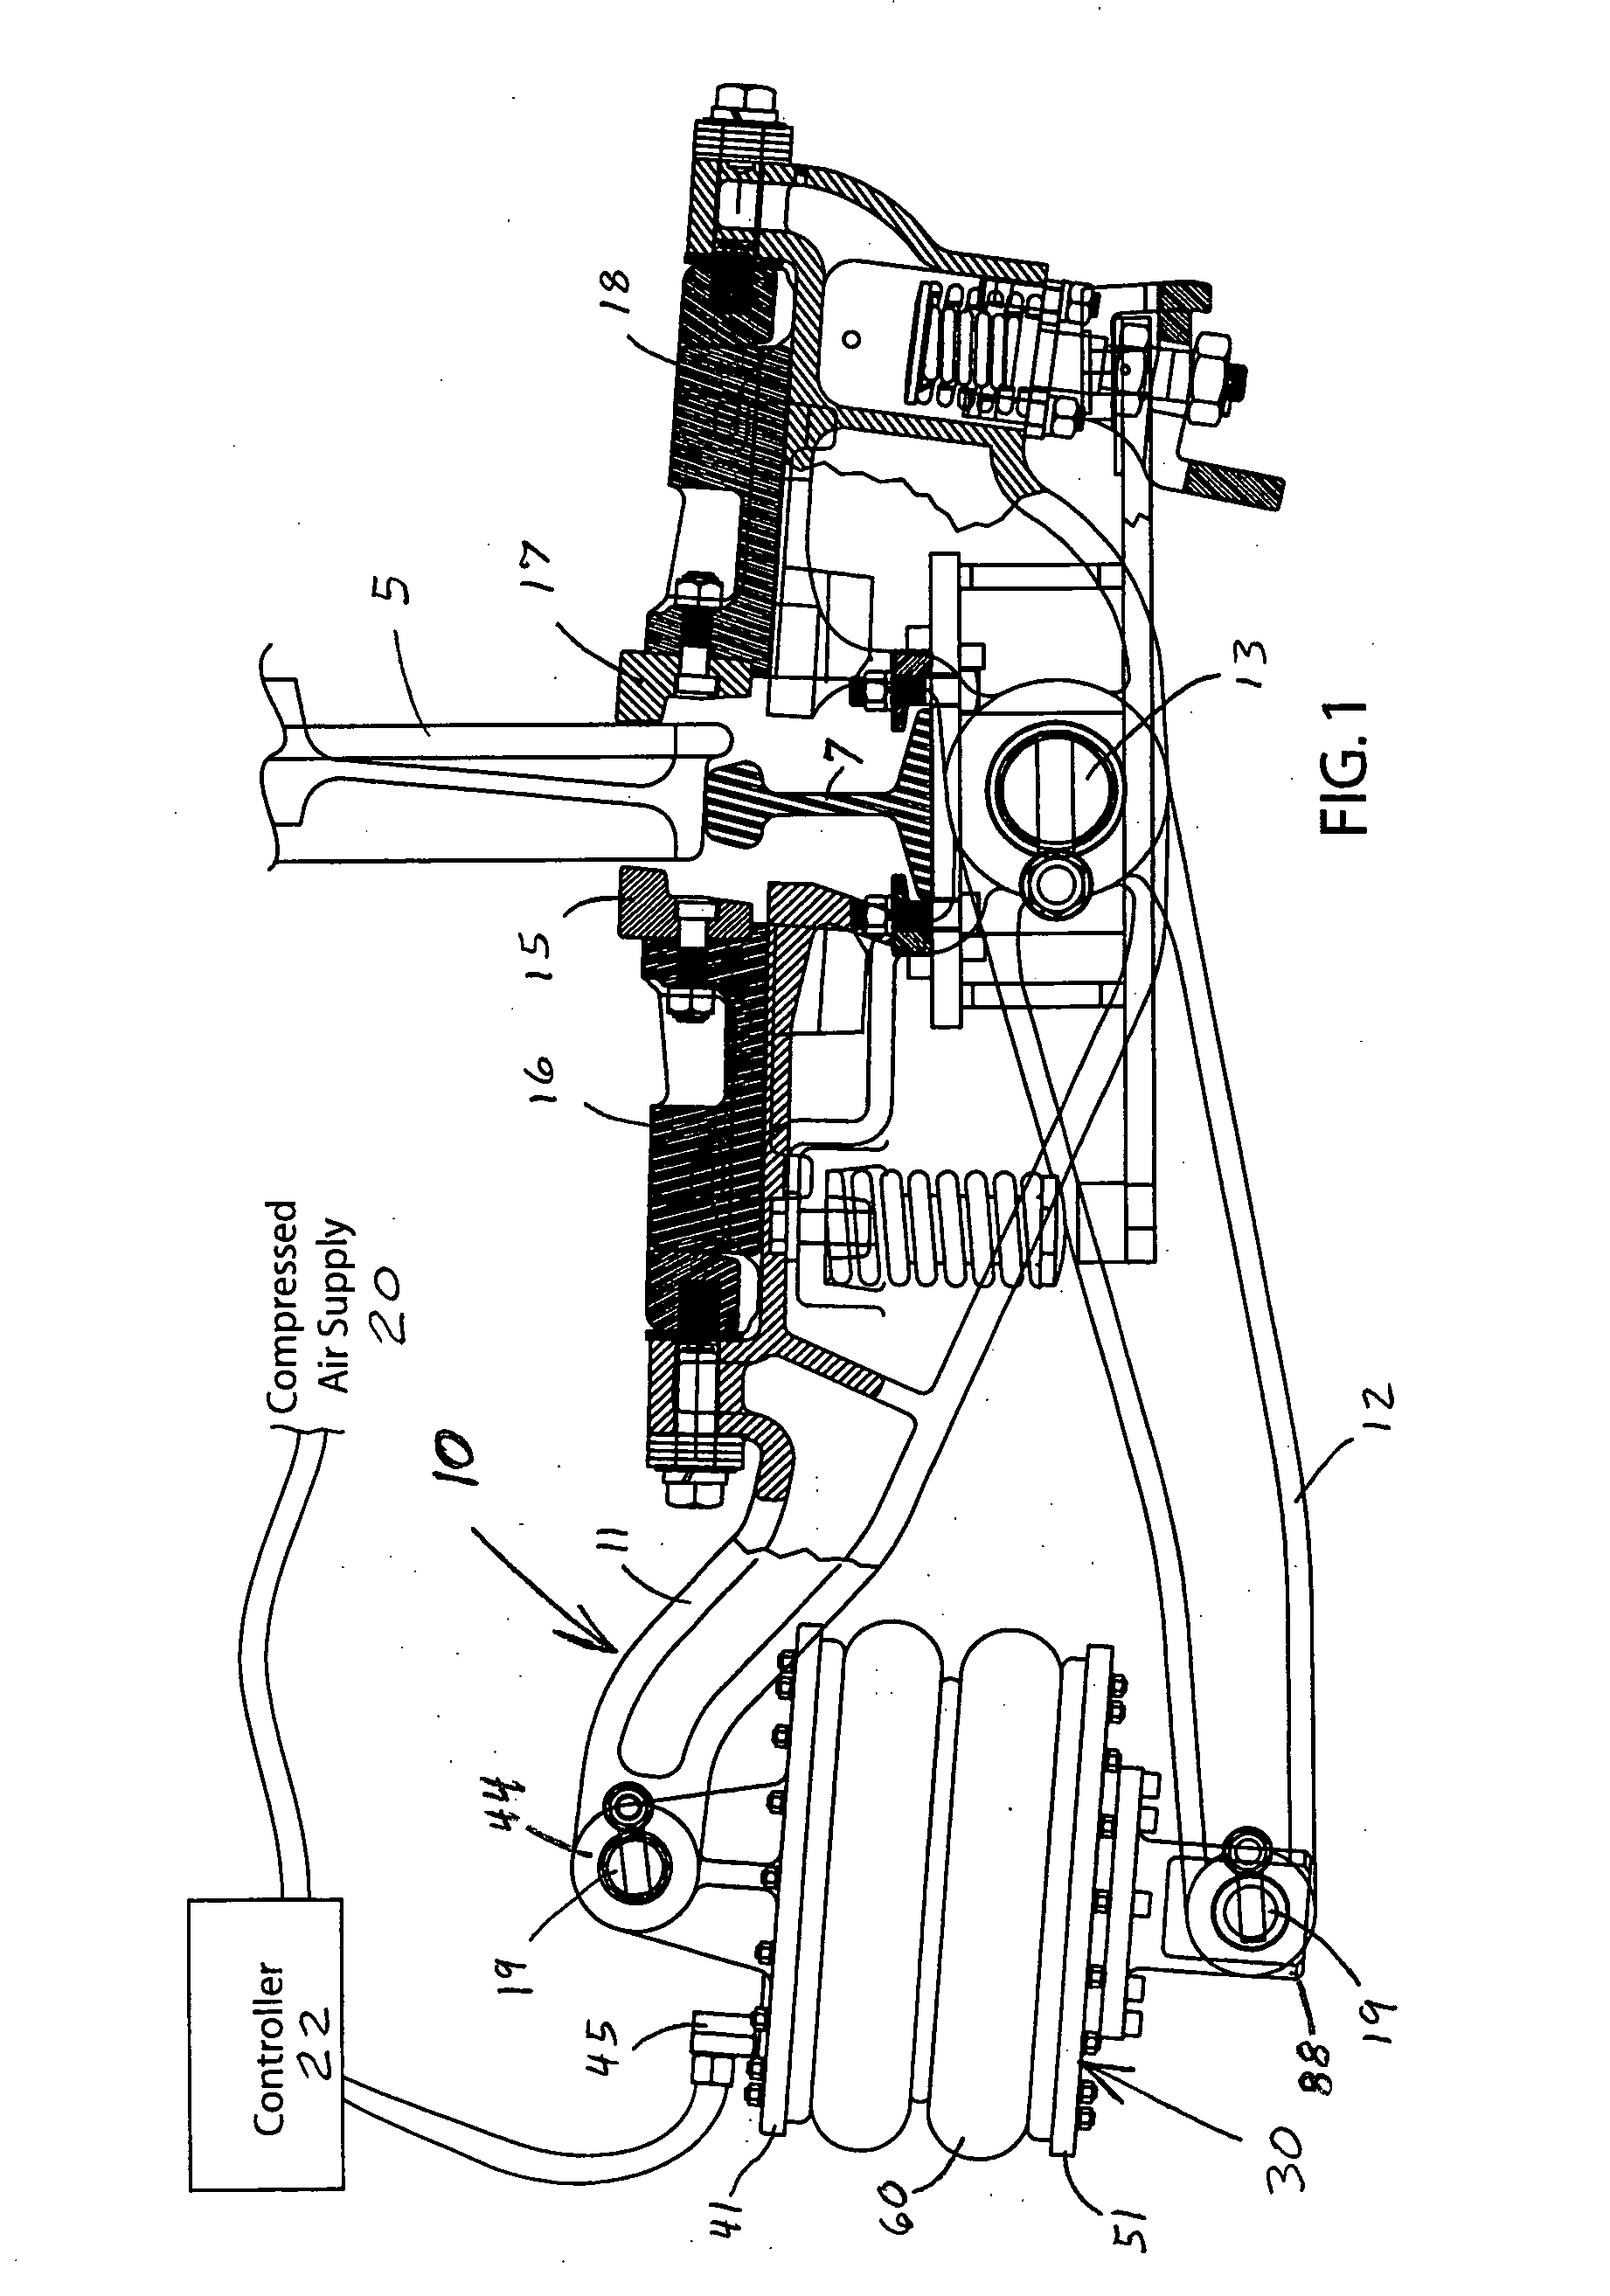 Bladder actuator for a railroad retarder